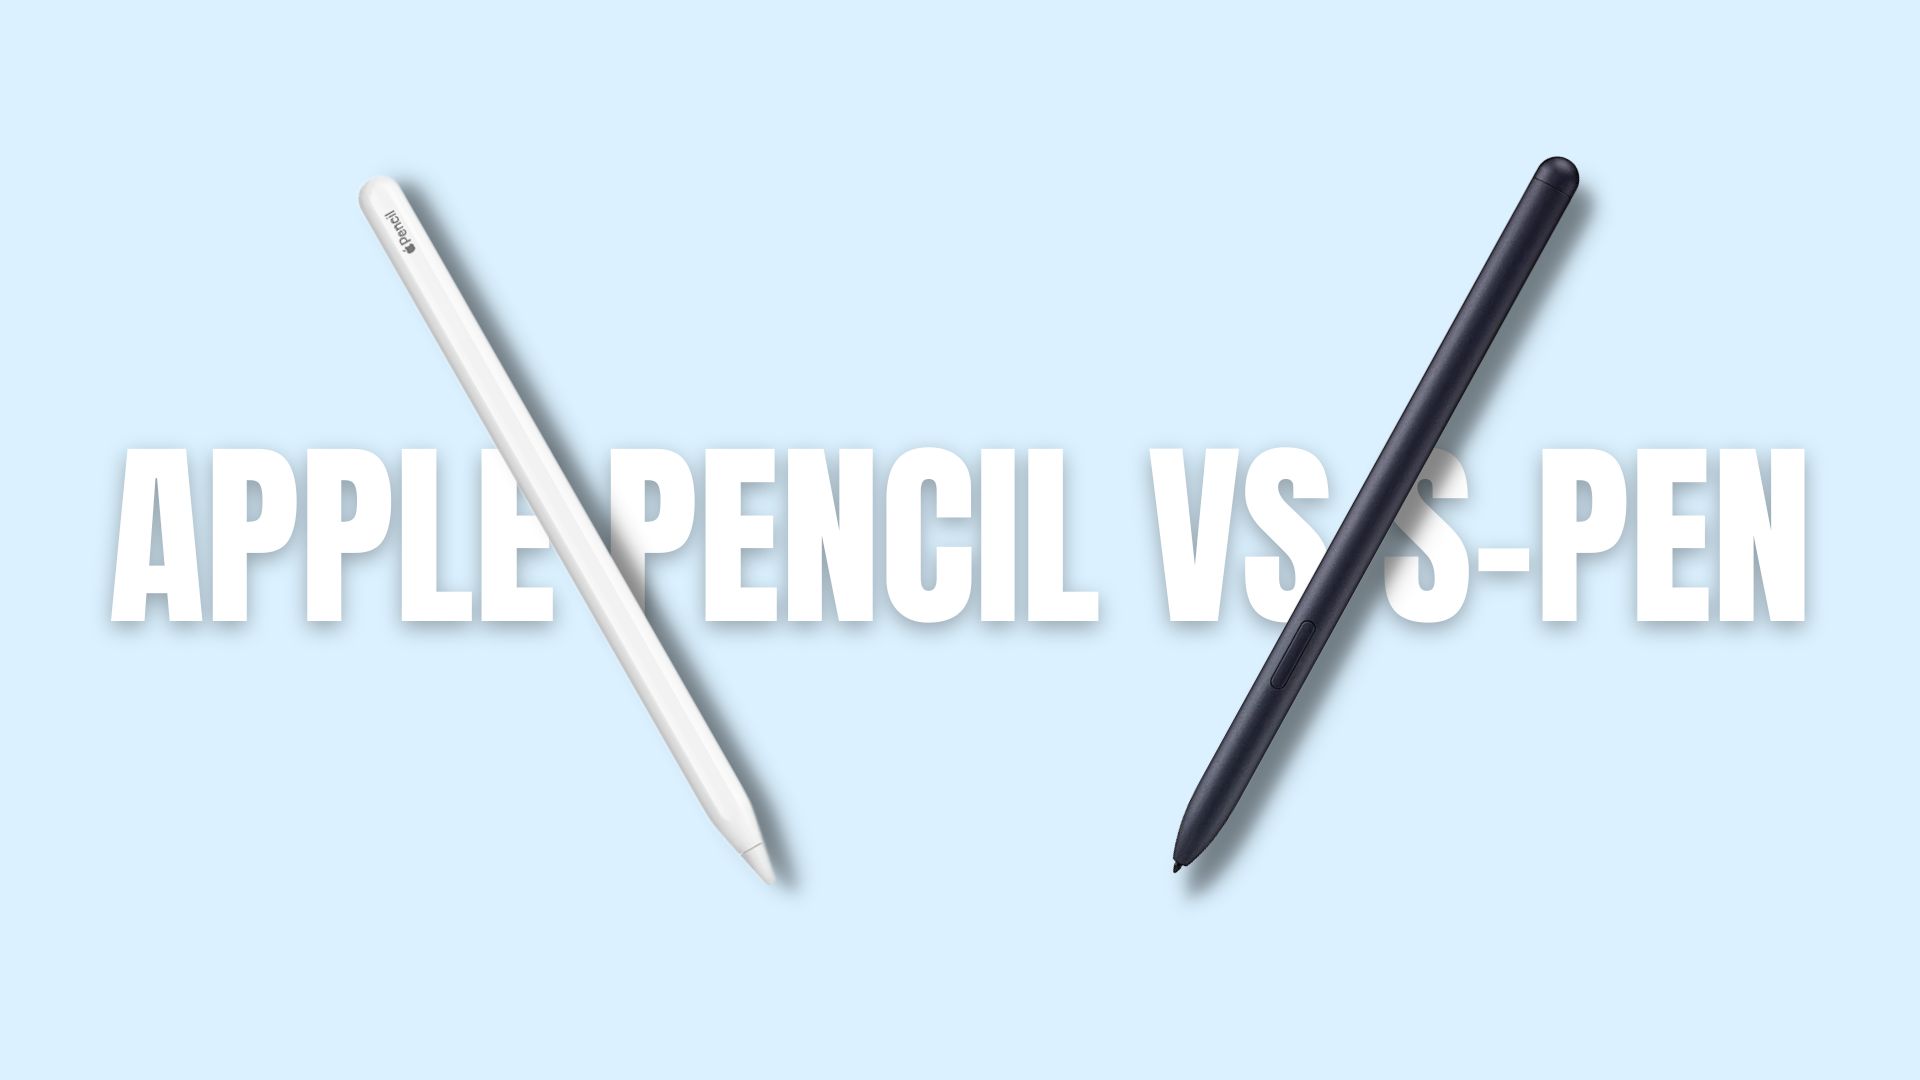 Apple Pencil vs S-Pen